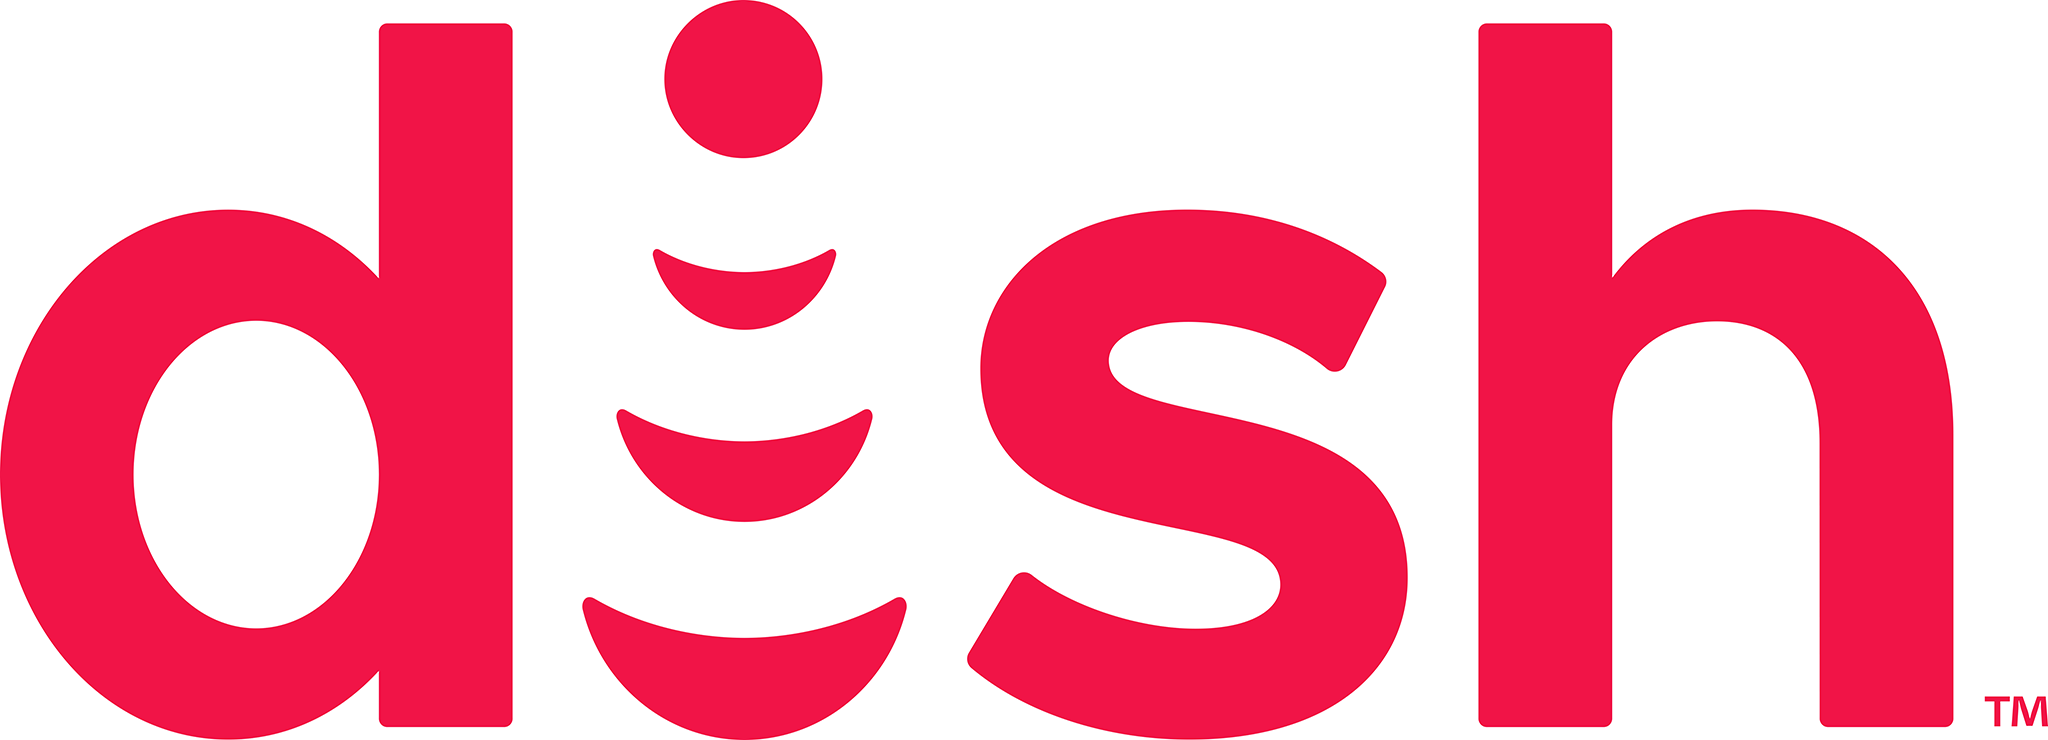 Dish Network Brand Logo